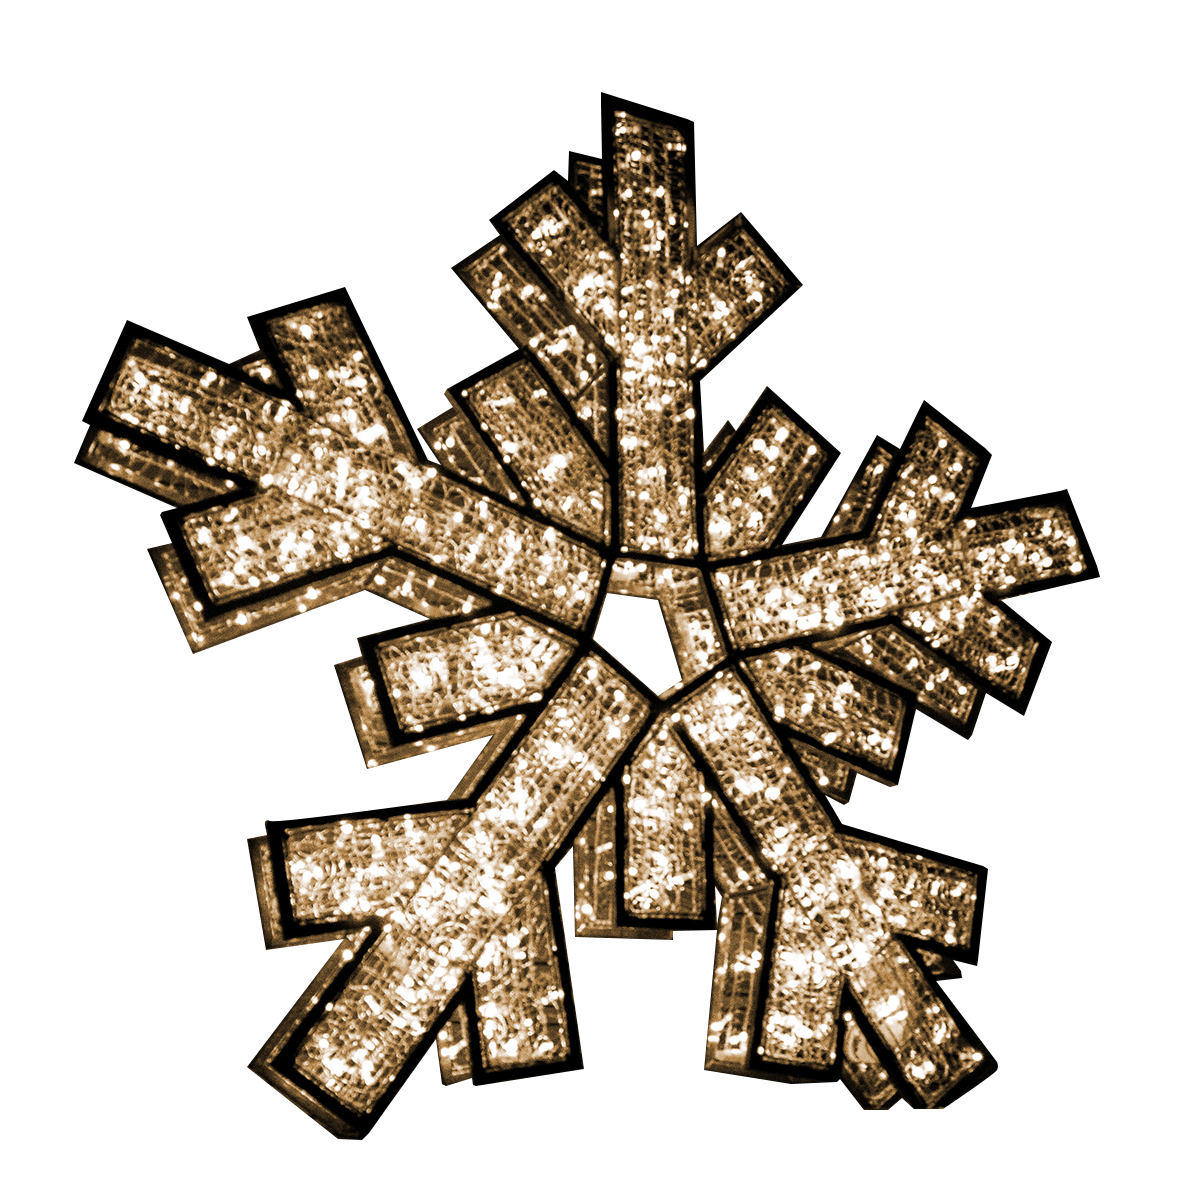 3D Snowflake - Christmas Display - Cool White LED Lights - Gold - Medium - 6.5ft tall